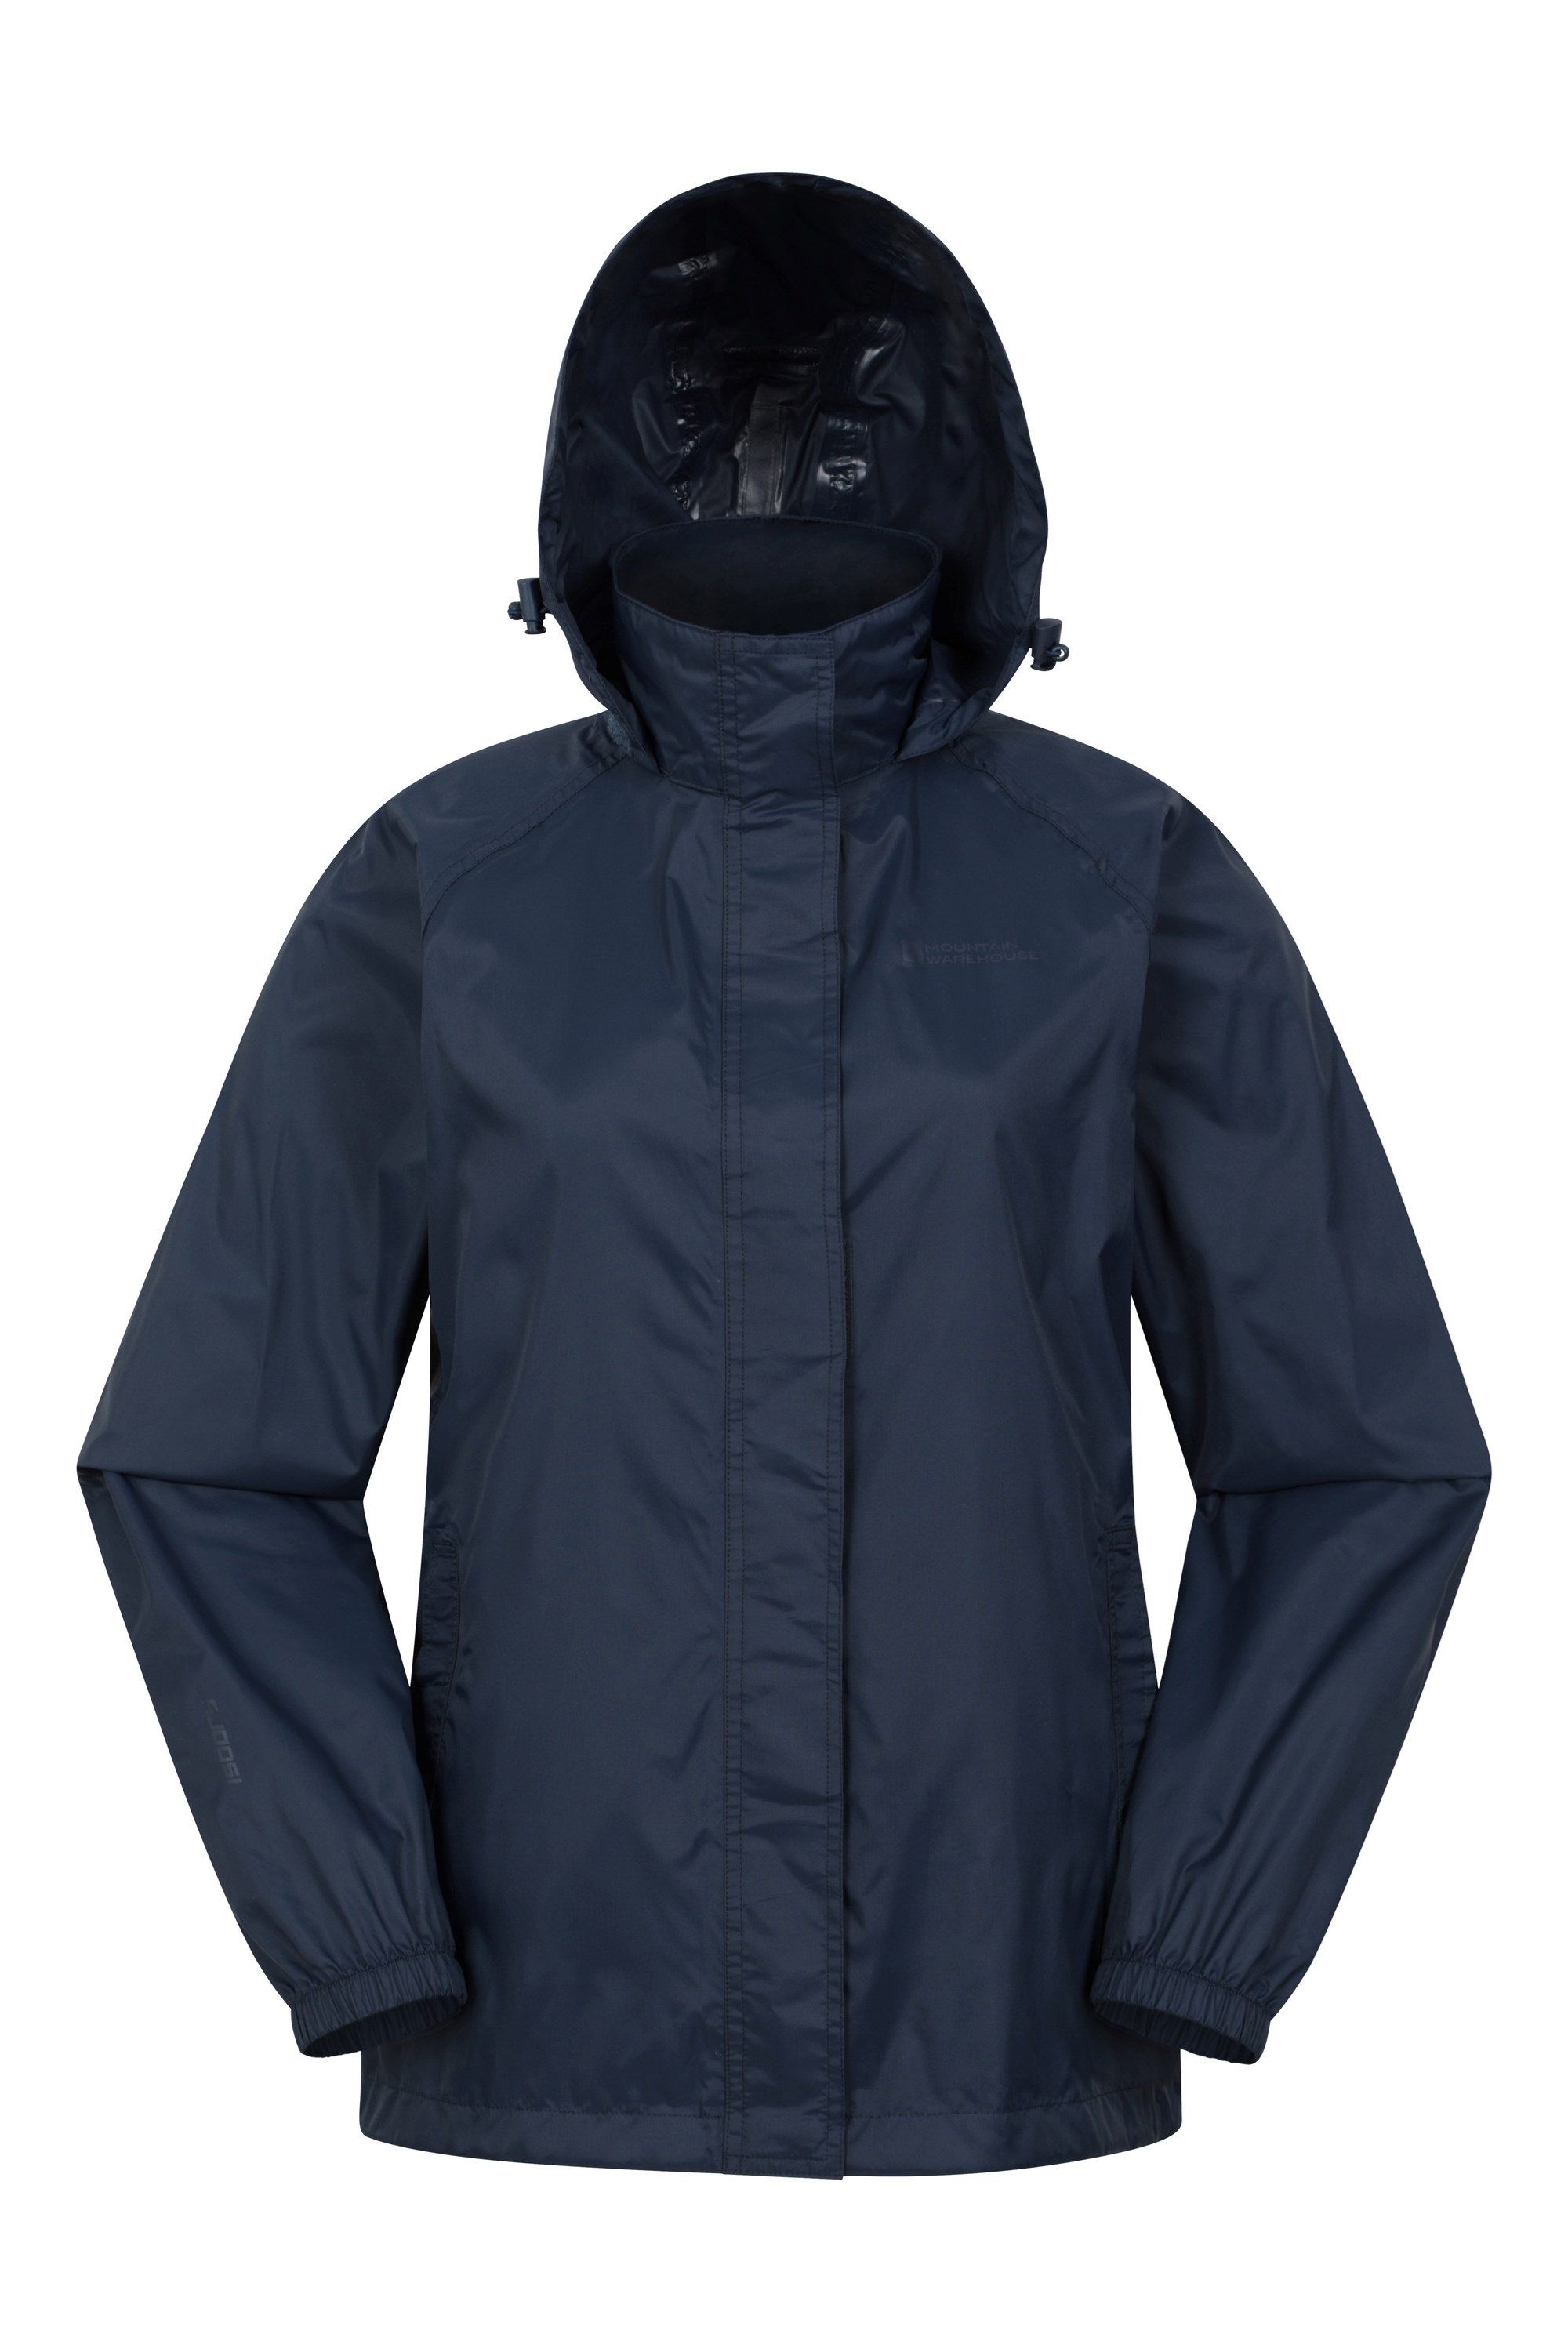 Buy Mountain Warehouse Dark Blue Pakka Waterproof Jacket - Kids from Next  Luxembourg